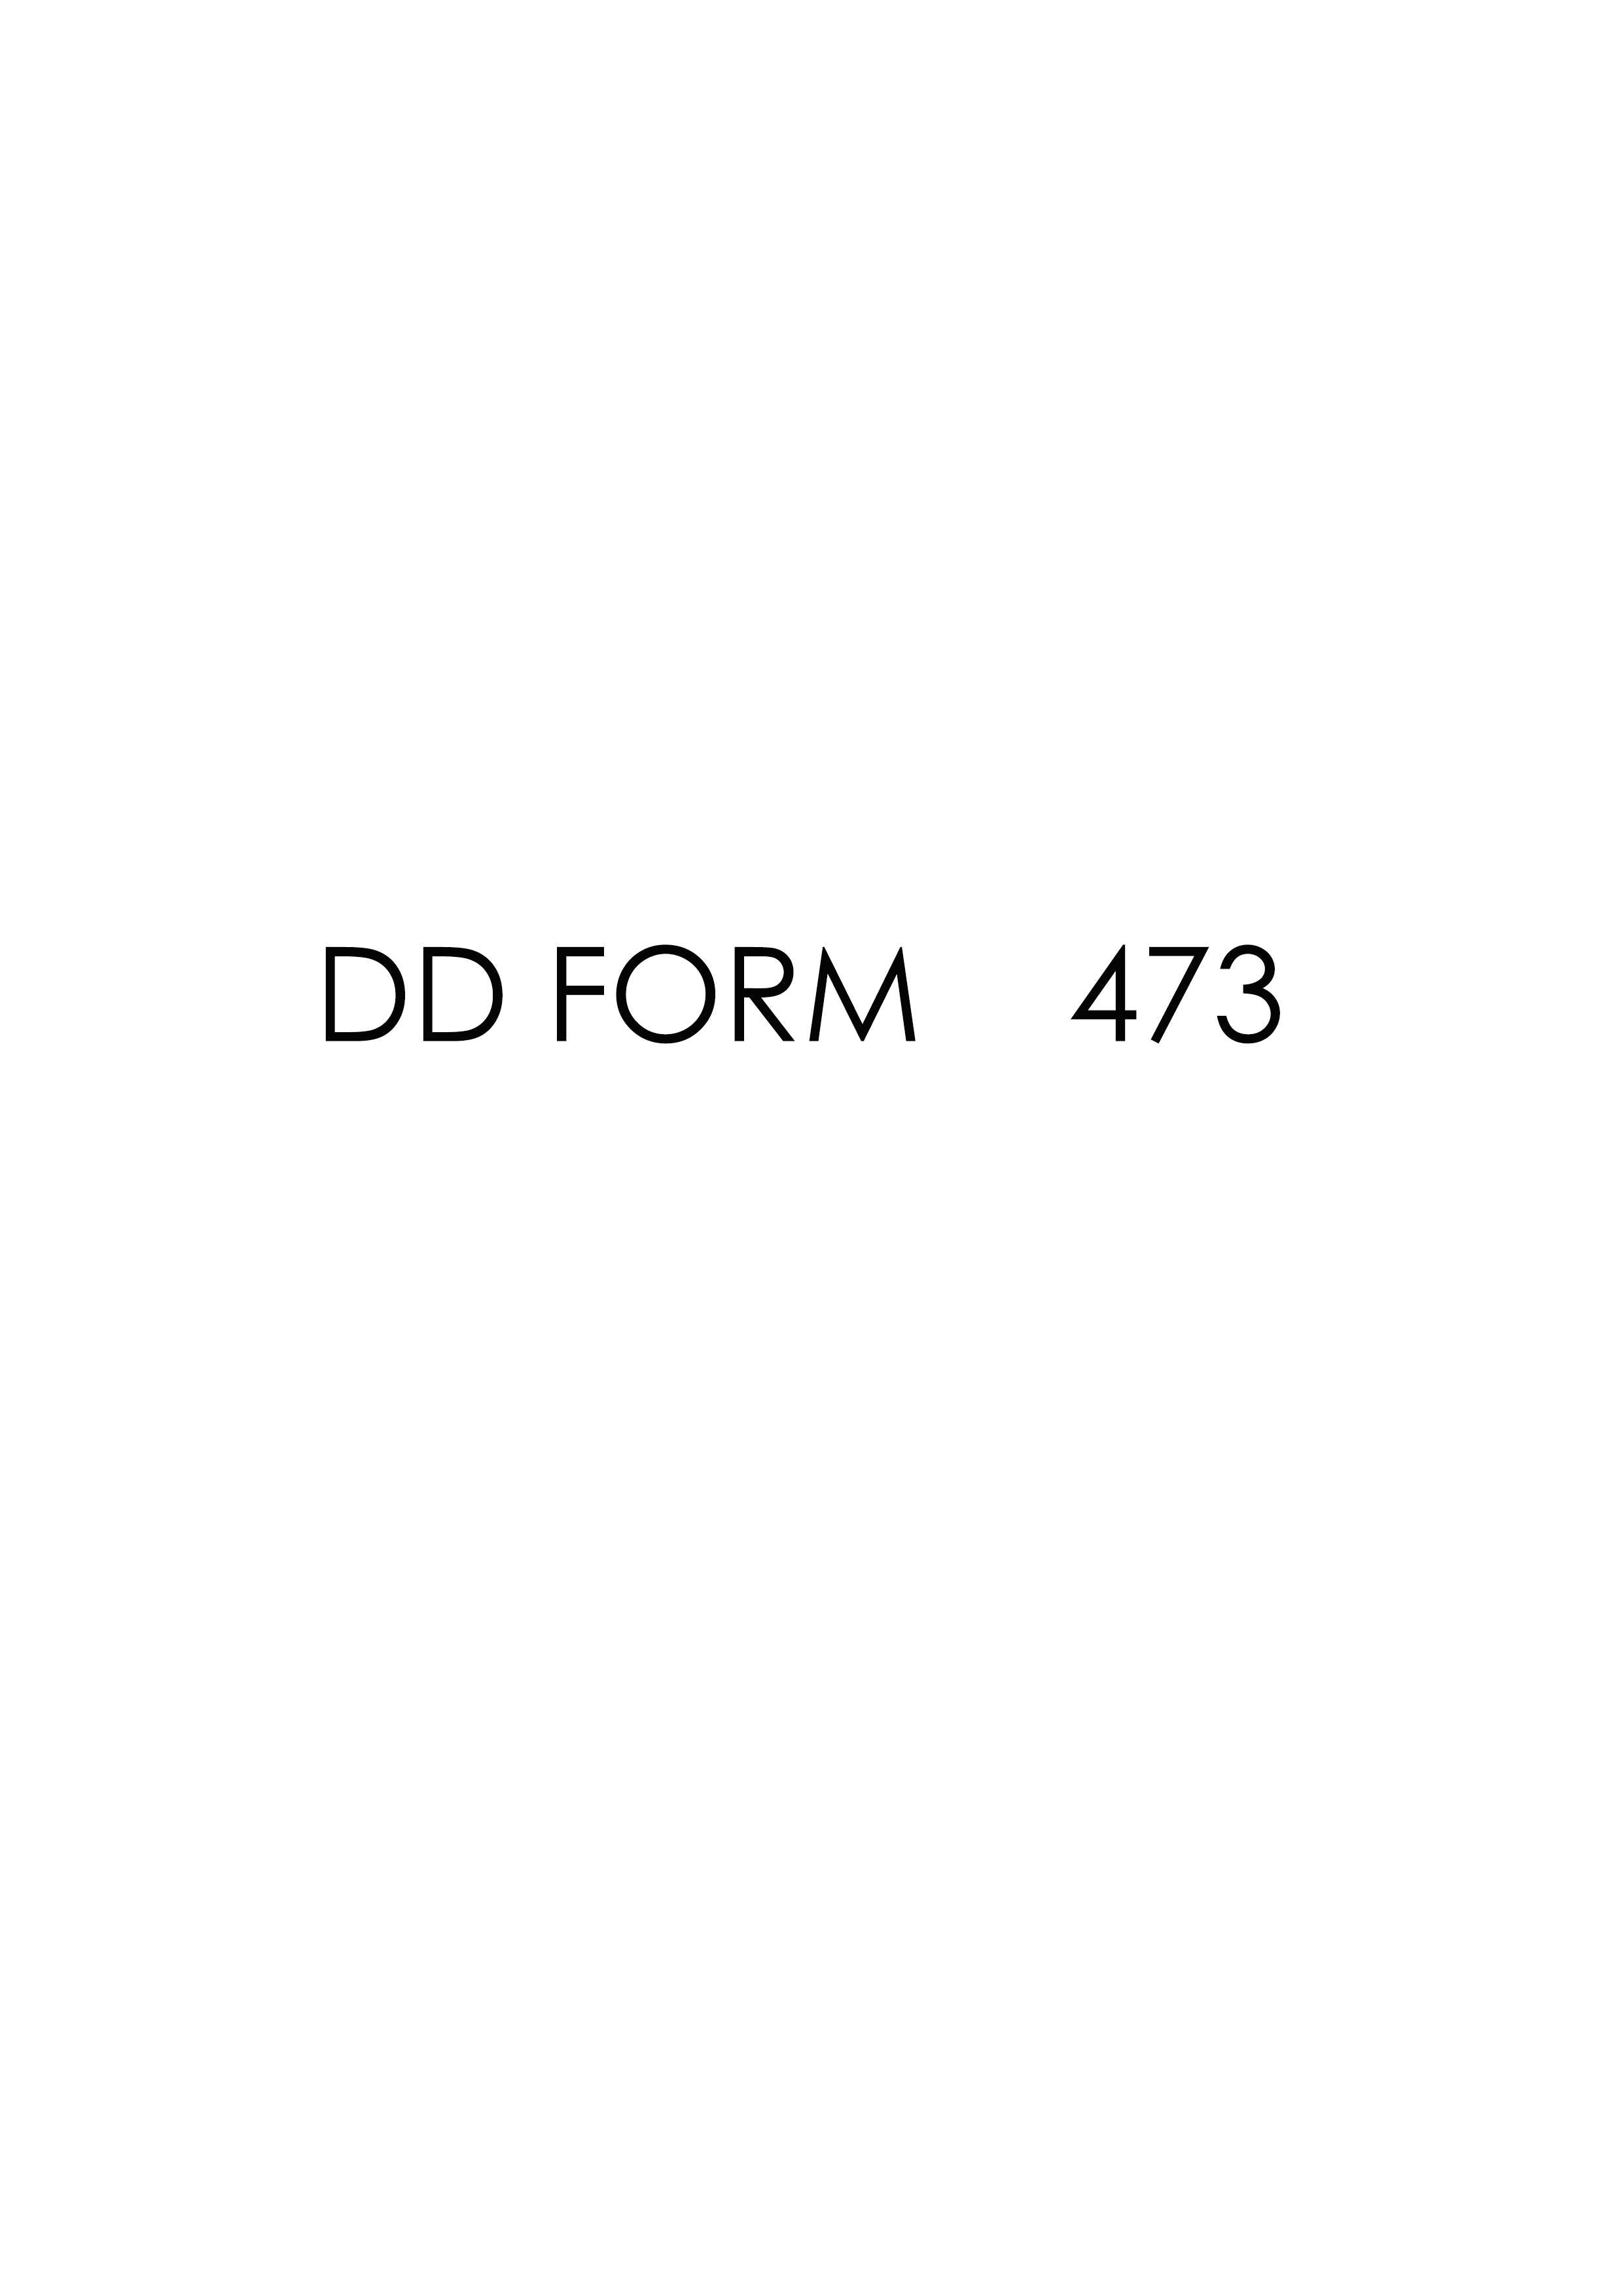 Download dd 473 Form